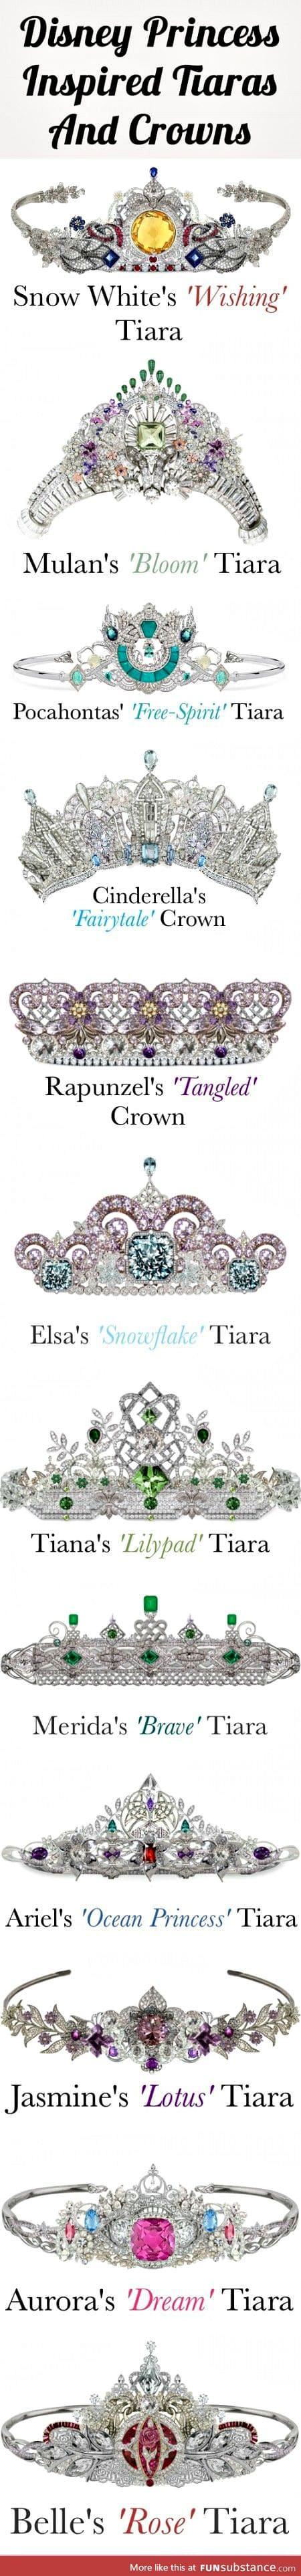 I love Elsa's